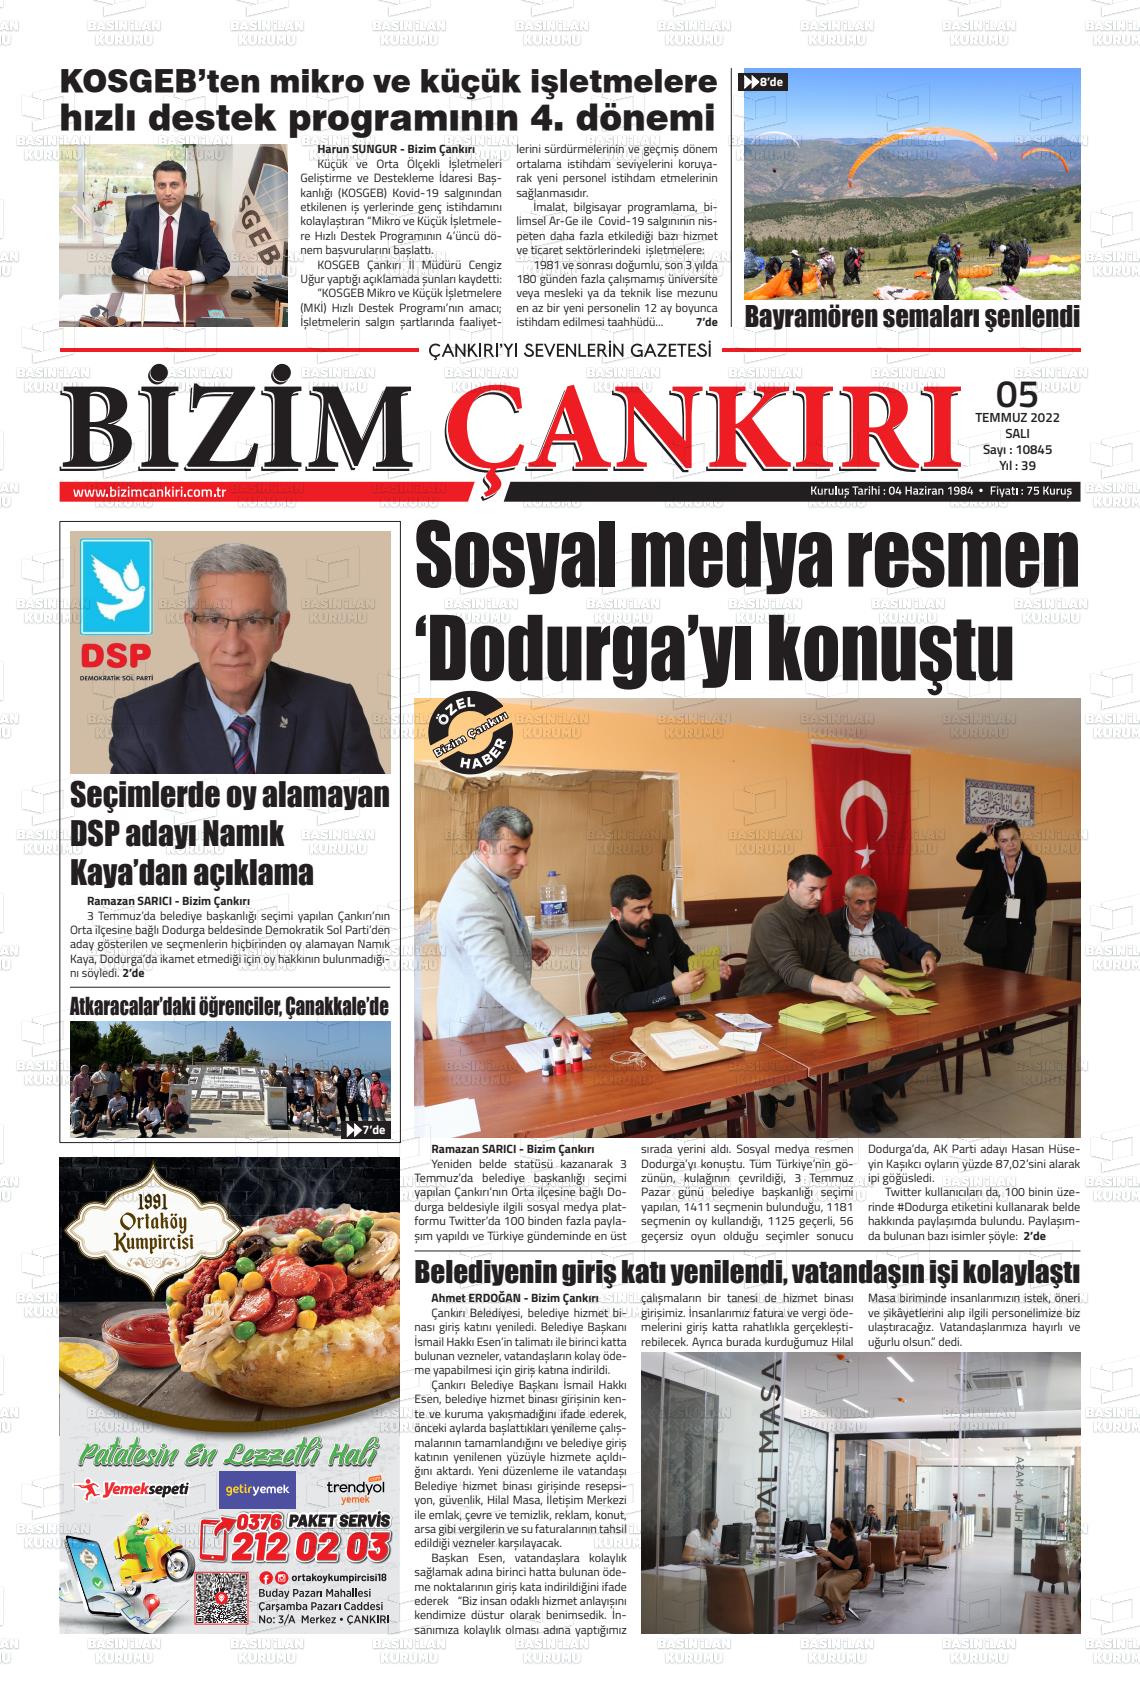 05 Temmuz 2022 Bizim Çankırı Gazete Manşeti